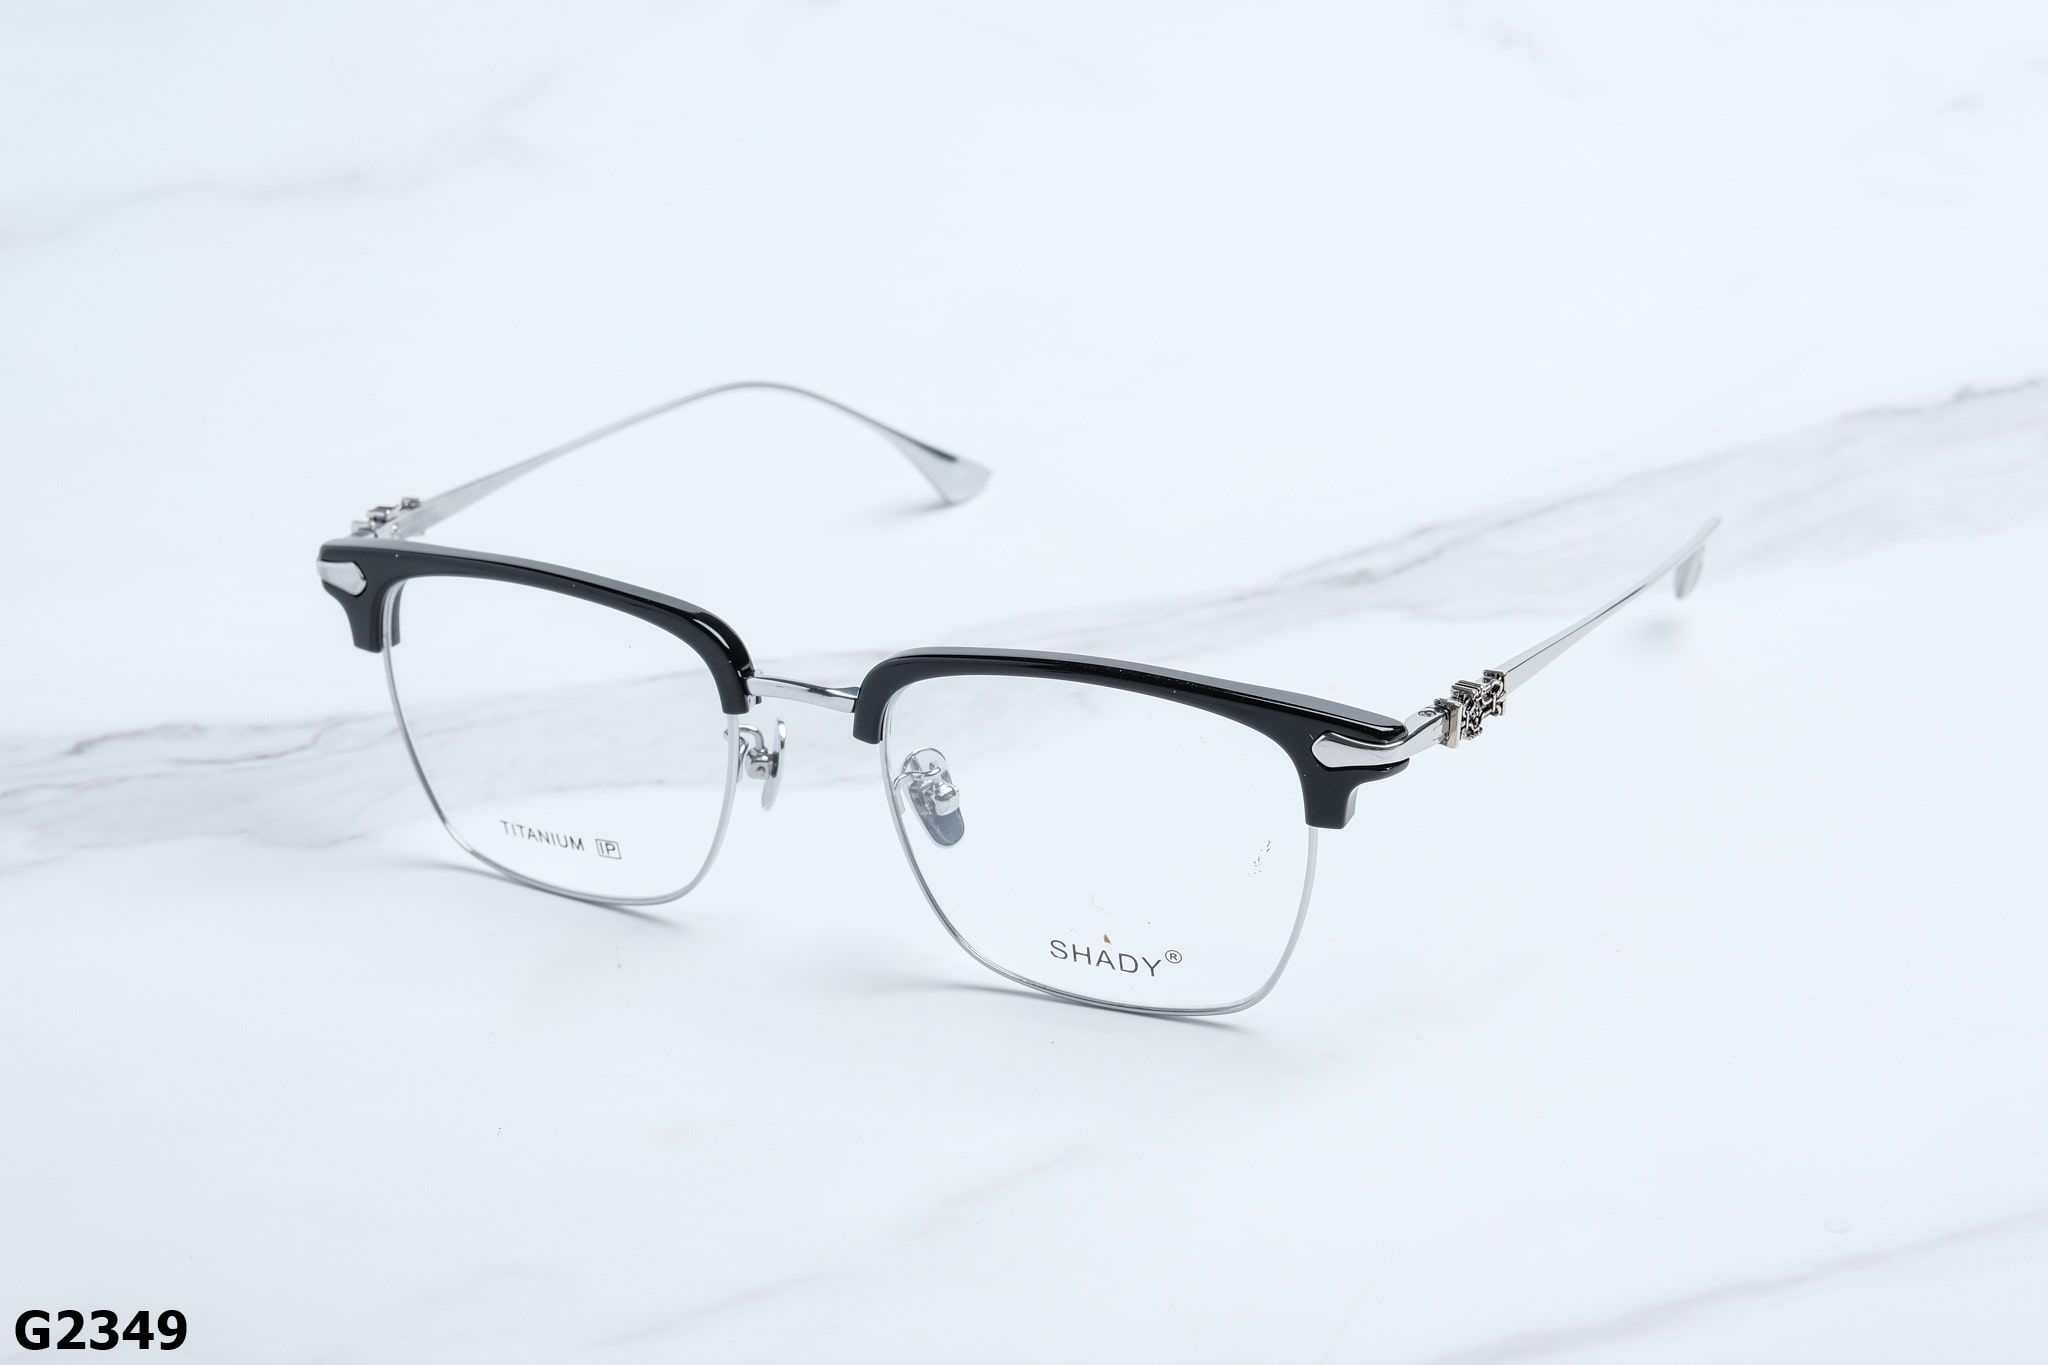  SHADY Eyewear - Glasses - G2349 